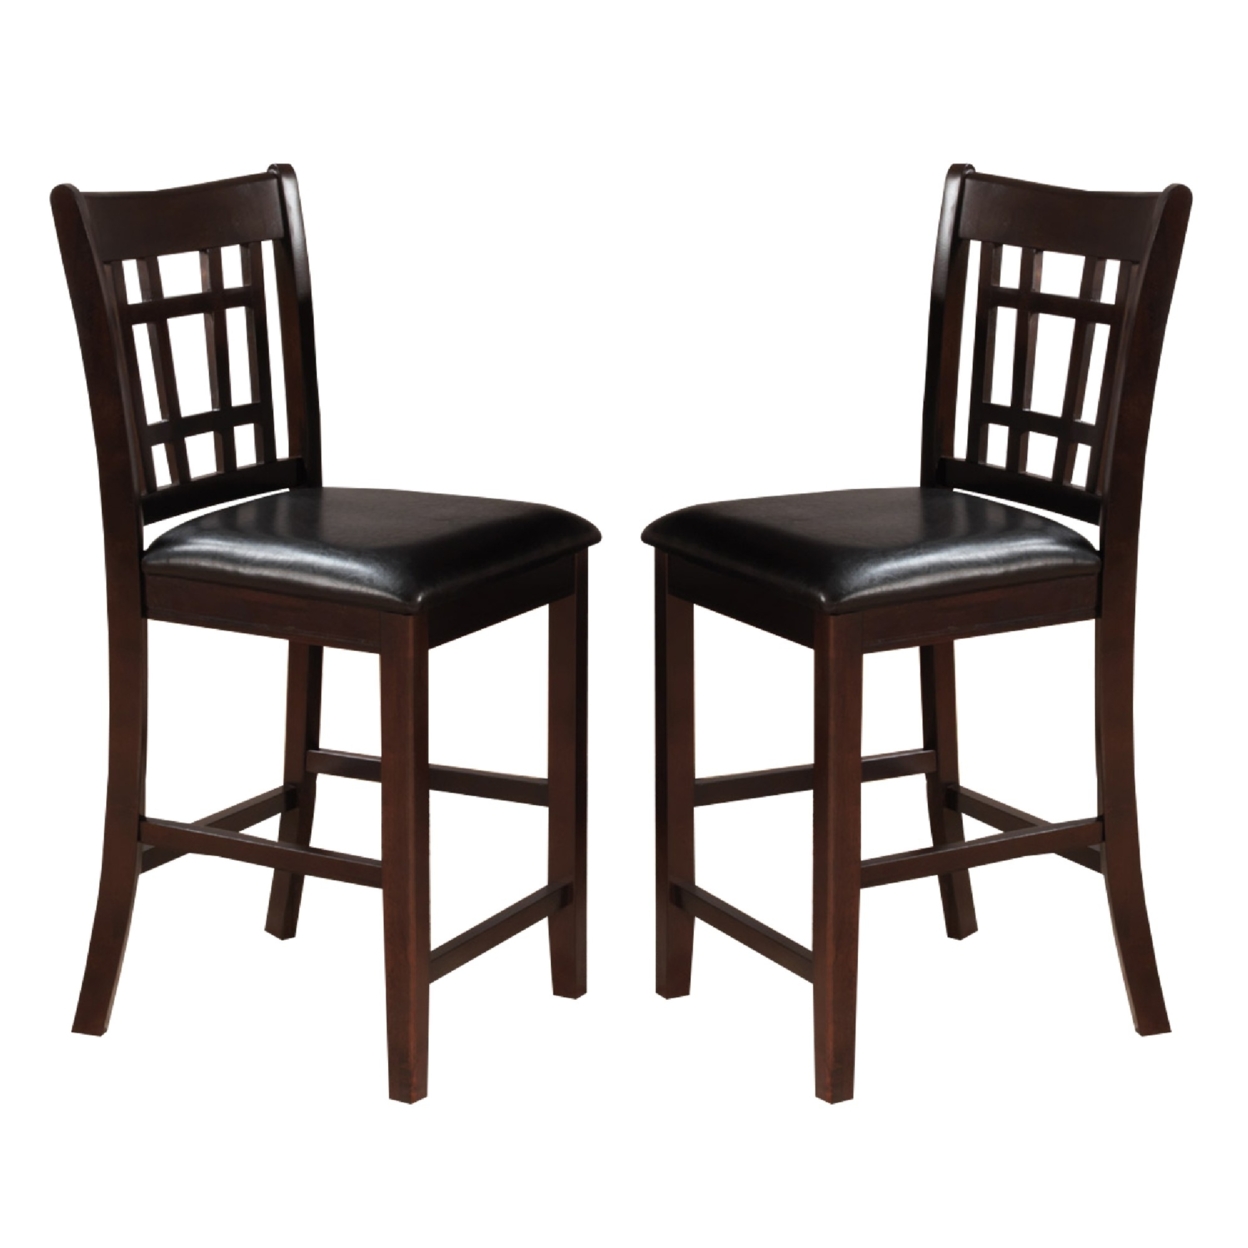 41 Inch Wood Counter Height Chair, Leatherette Seat, Dark Brown, Set Of 2- Saltoro Sherpi